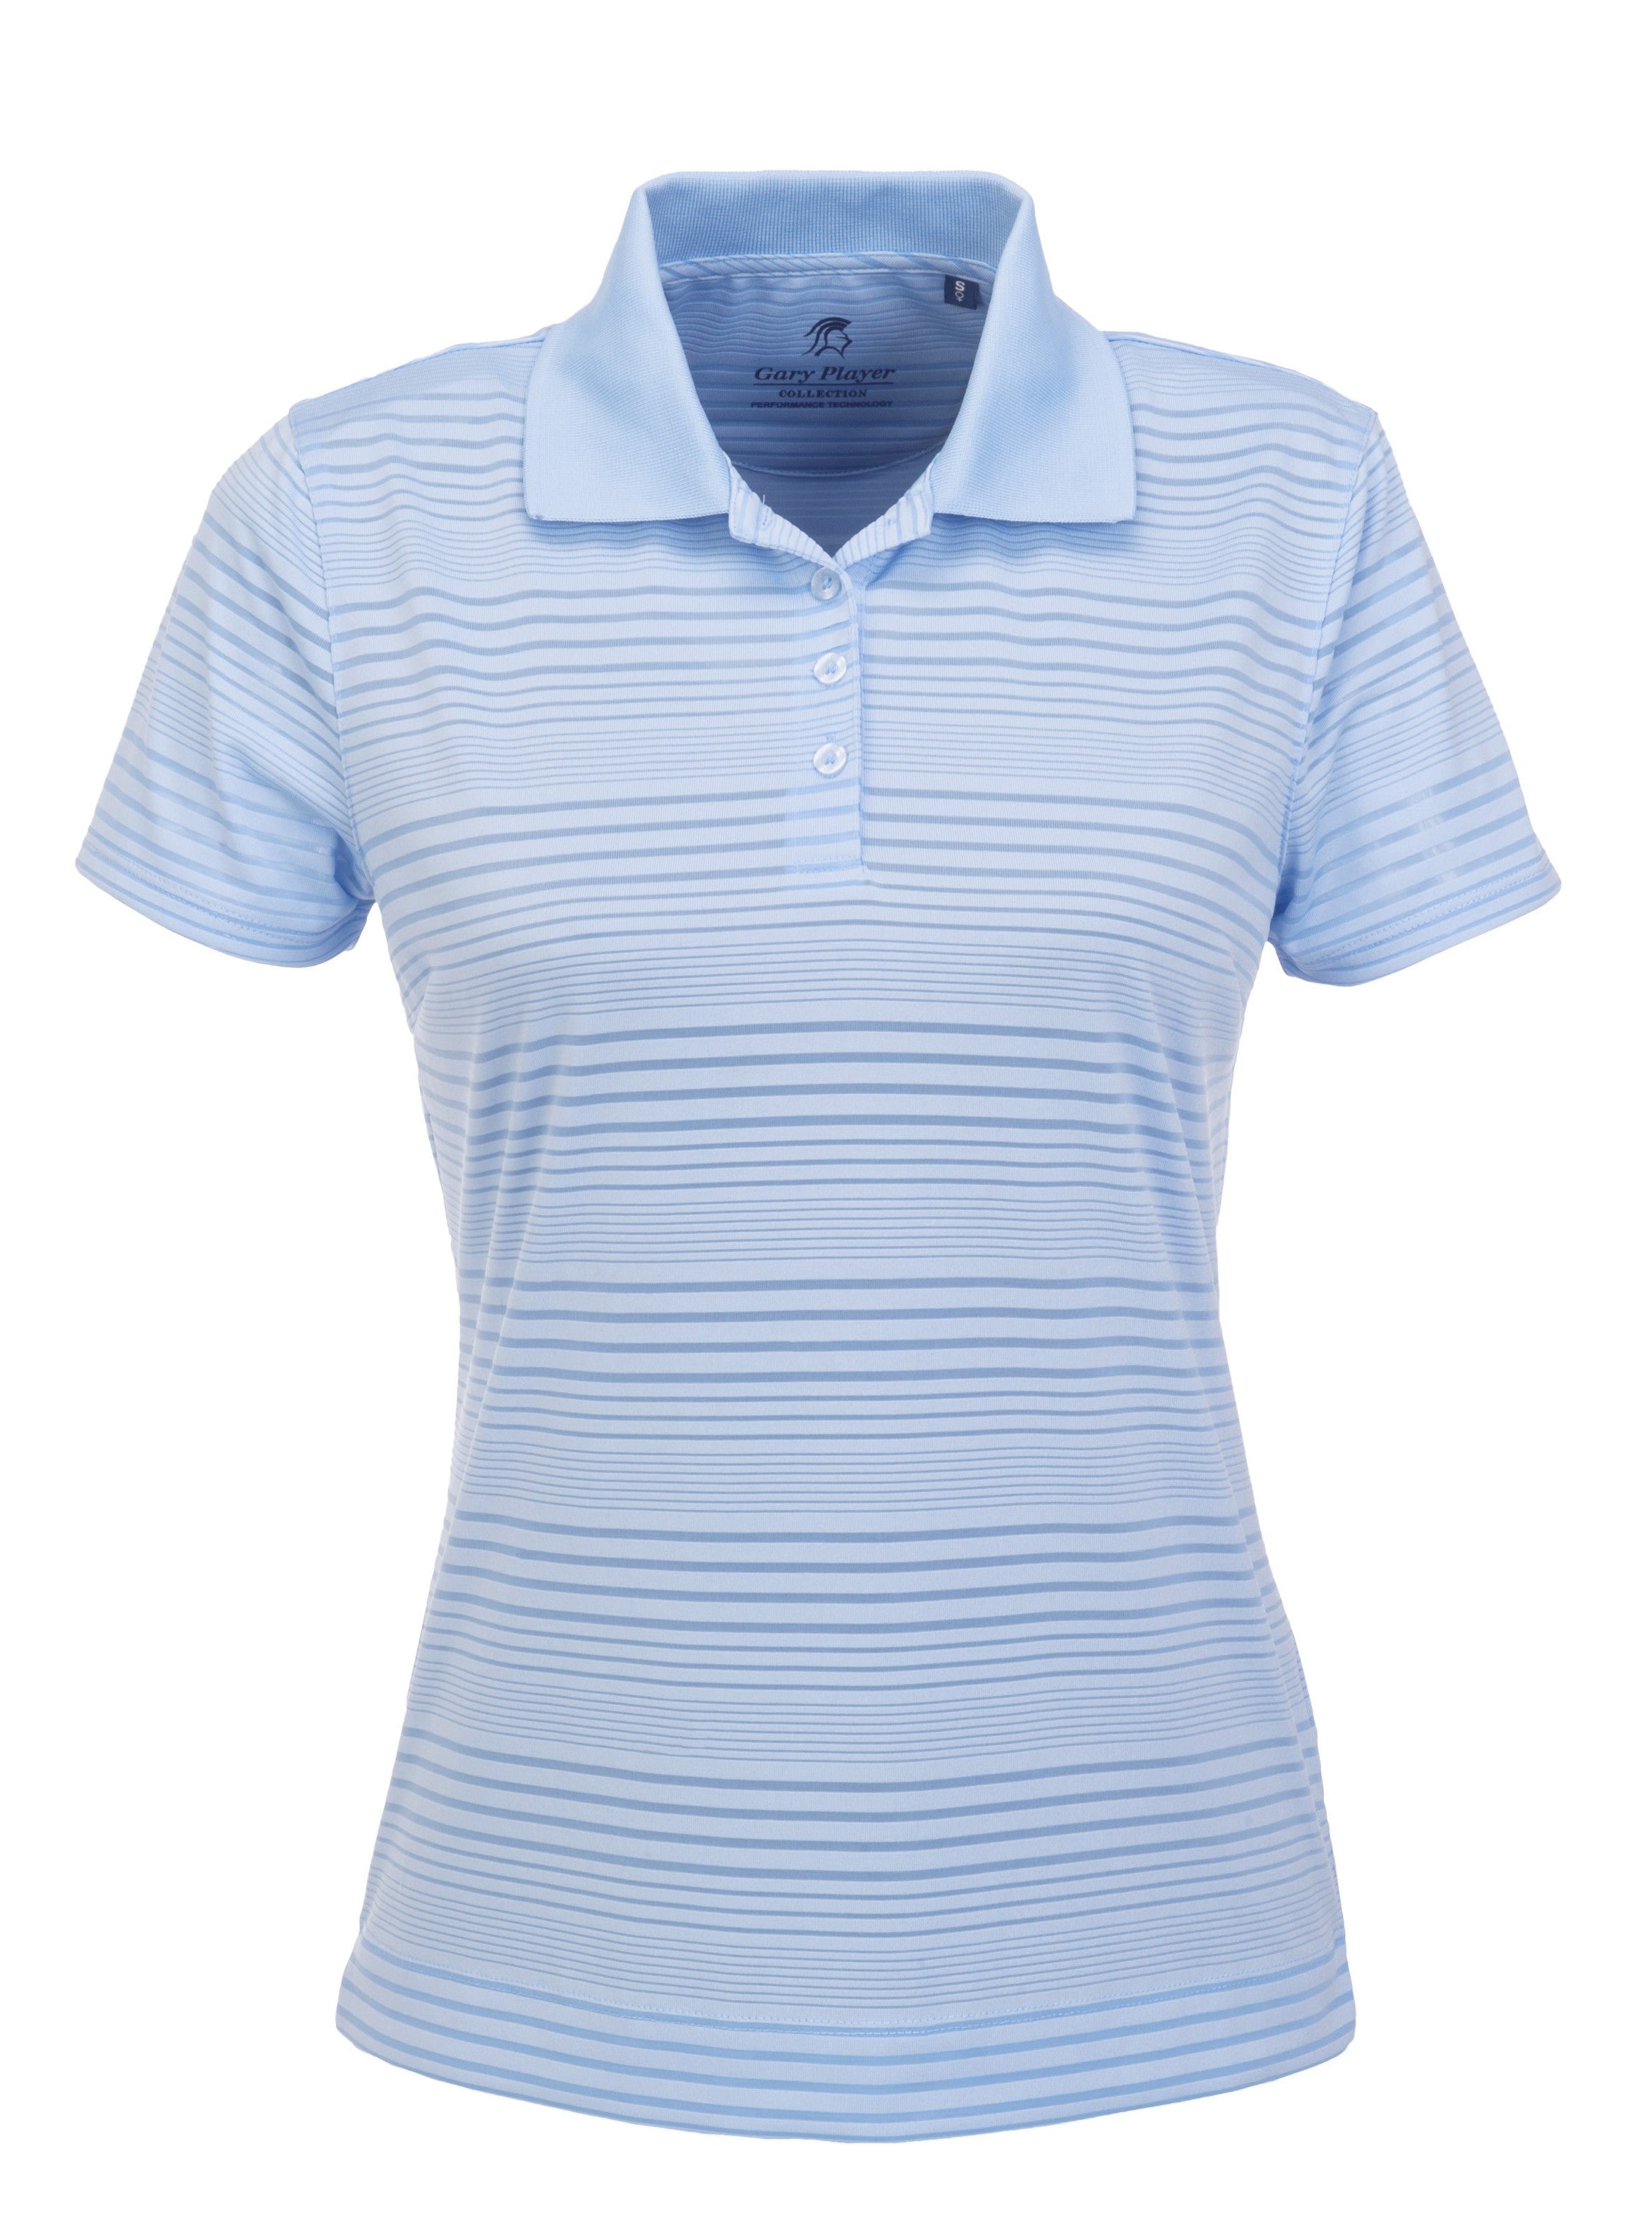 Ladies Westlake Golf Shirt - Grey Only-L-Light Blue-LB